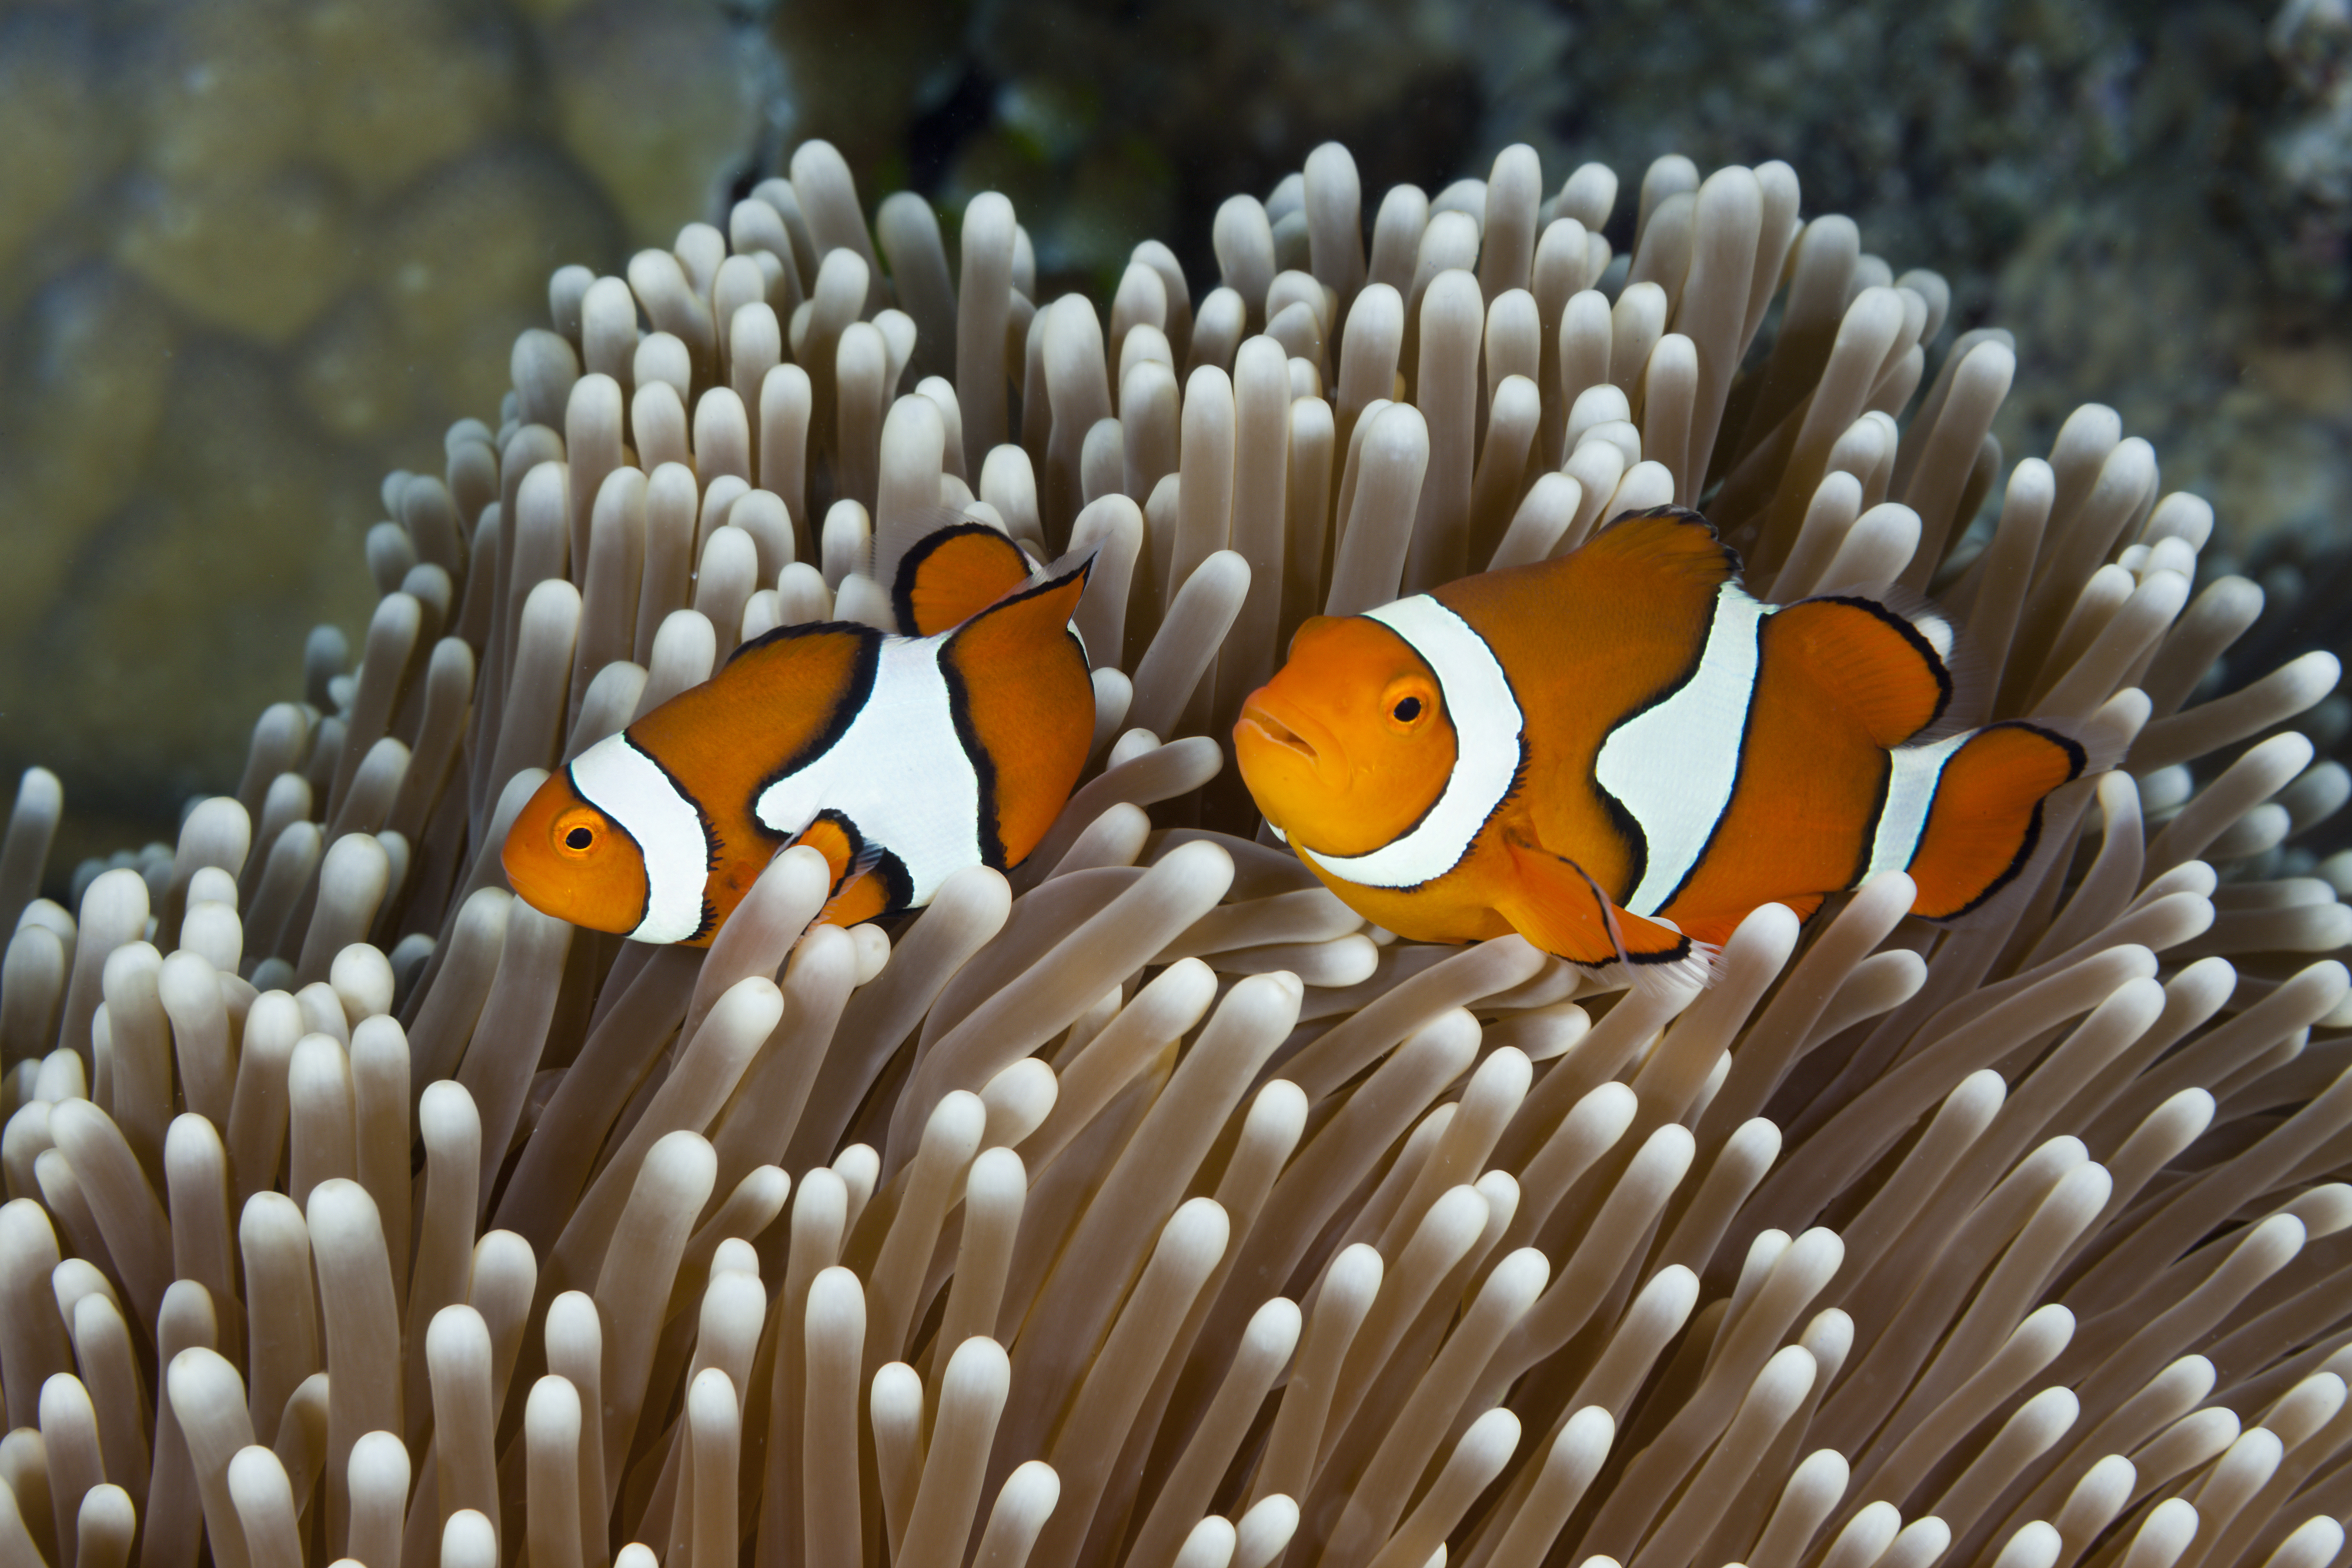 Two clownfish swimming among sea anemone tentacles